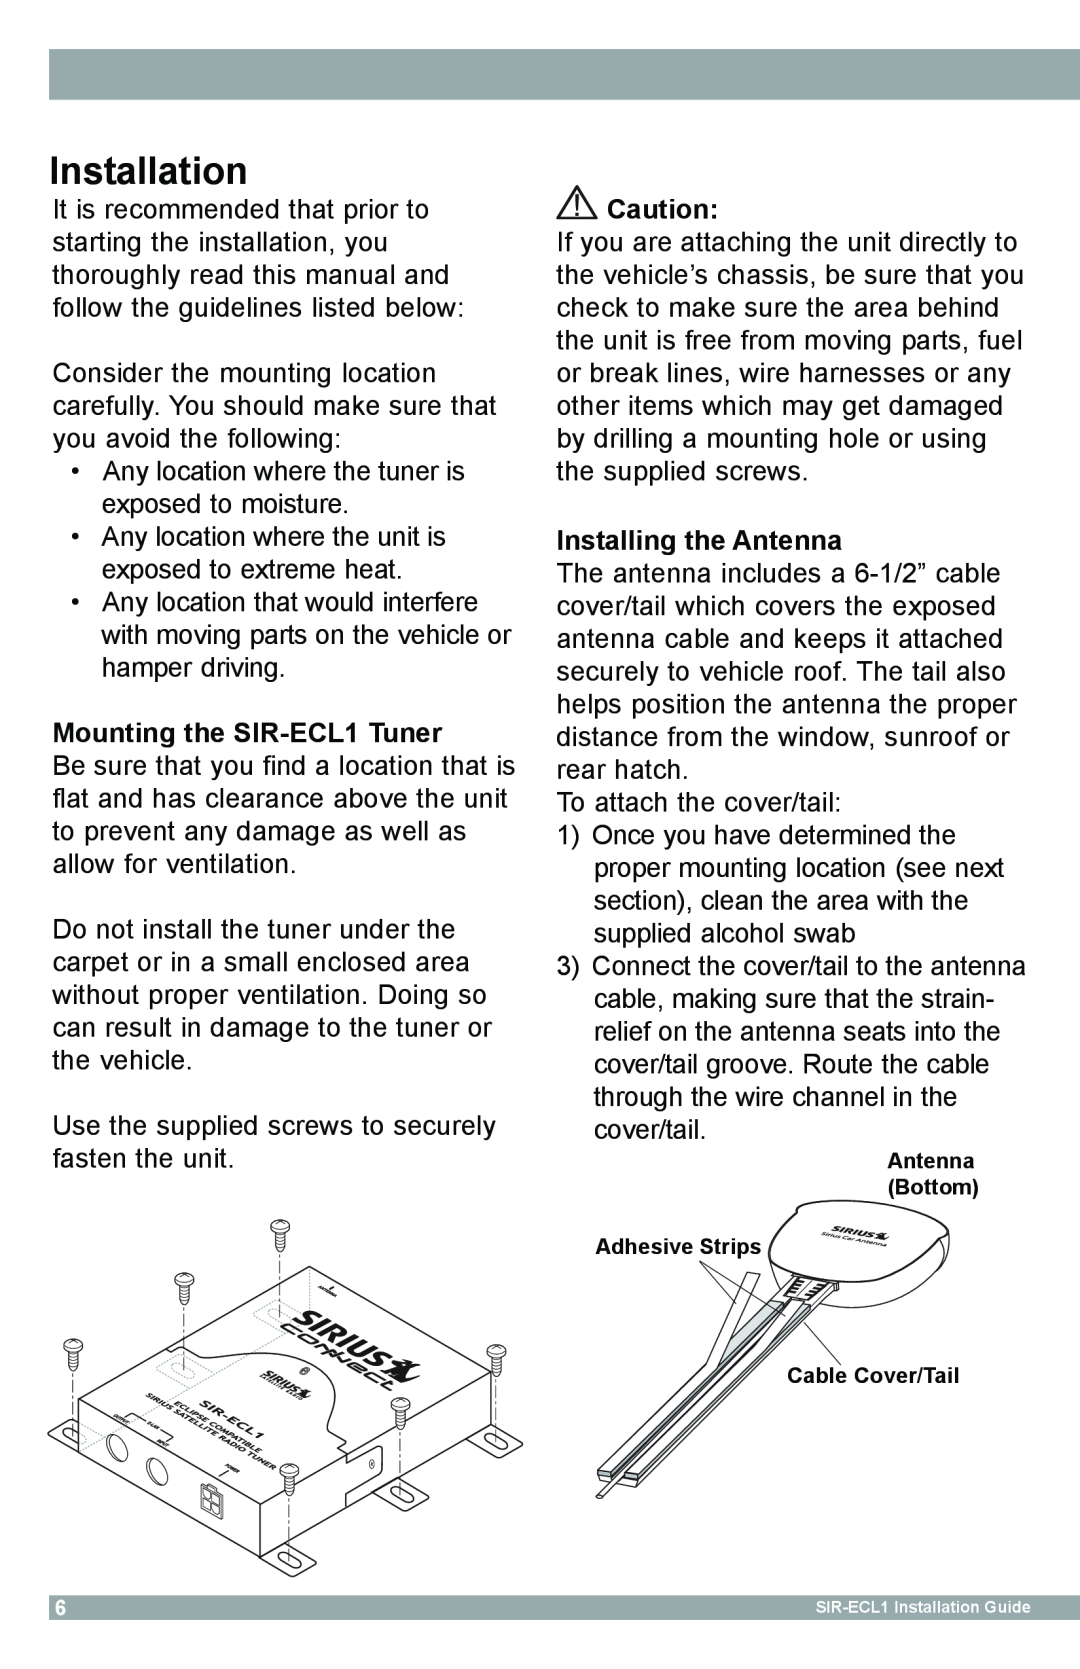 Sirius Satellite Radio manual Installation, Mounting the SIR-ECL1Tuner, Installing the Antenna 